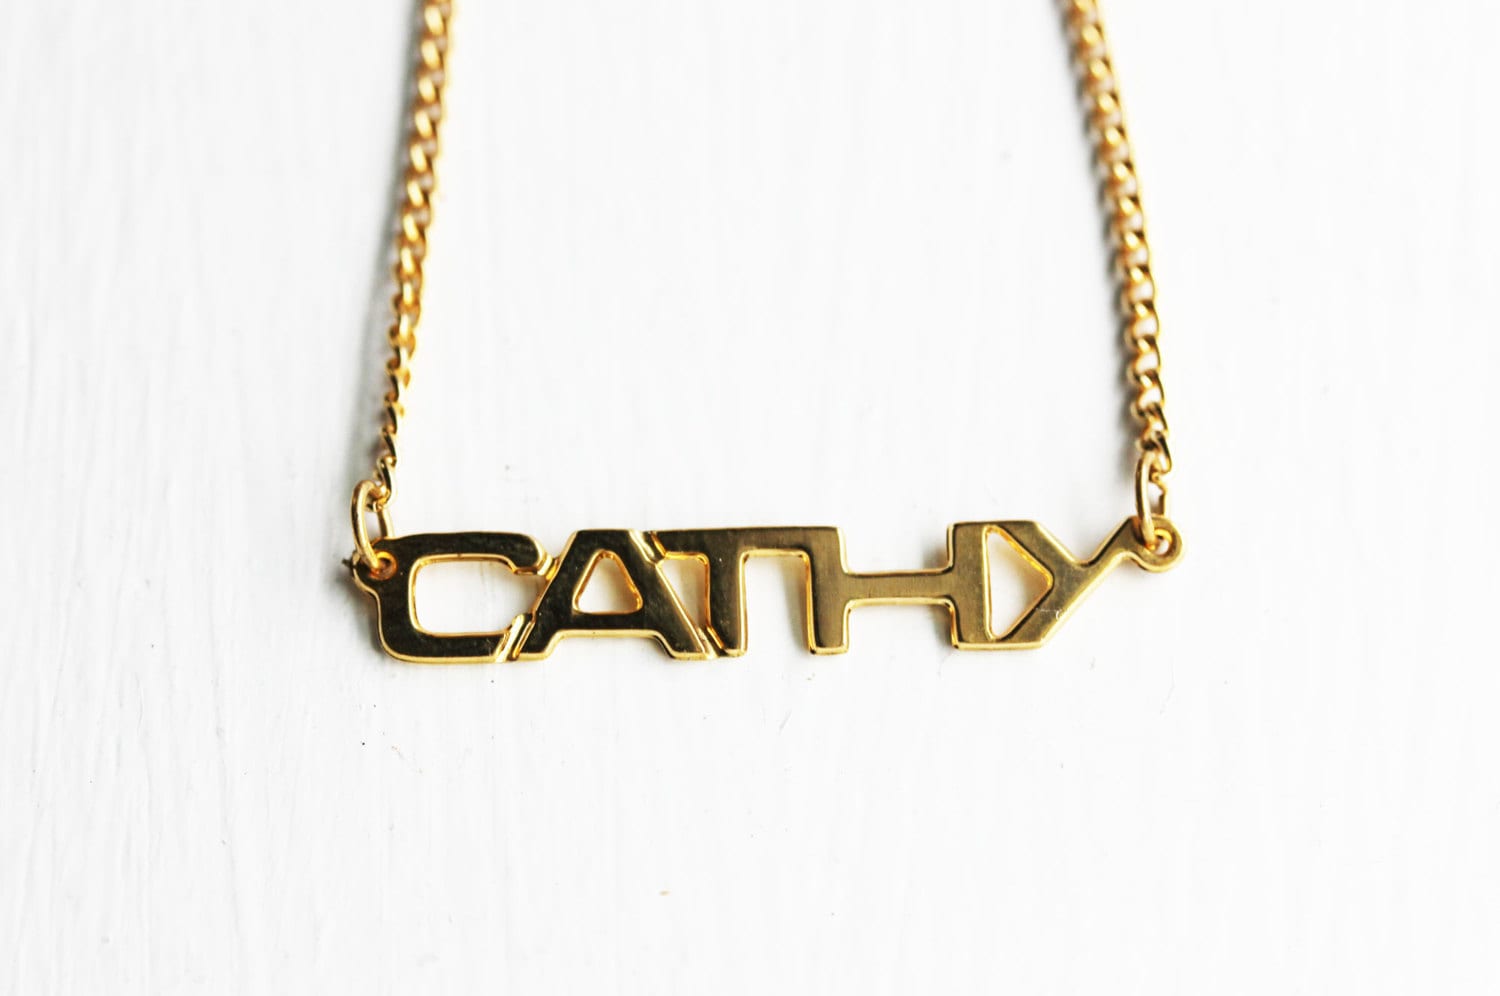 Cathy Namenskette Gold, Namenskette, Vintage Goldkette, Halskette von diamentdesigns